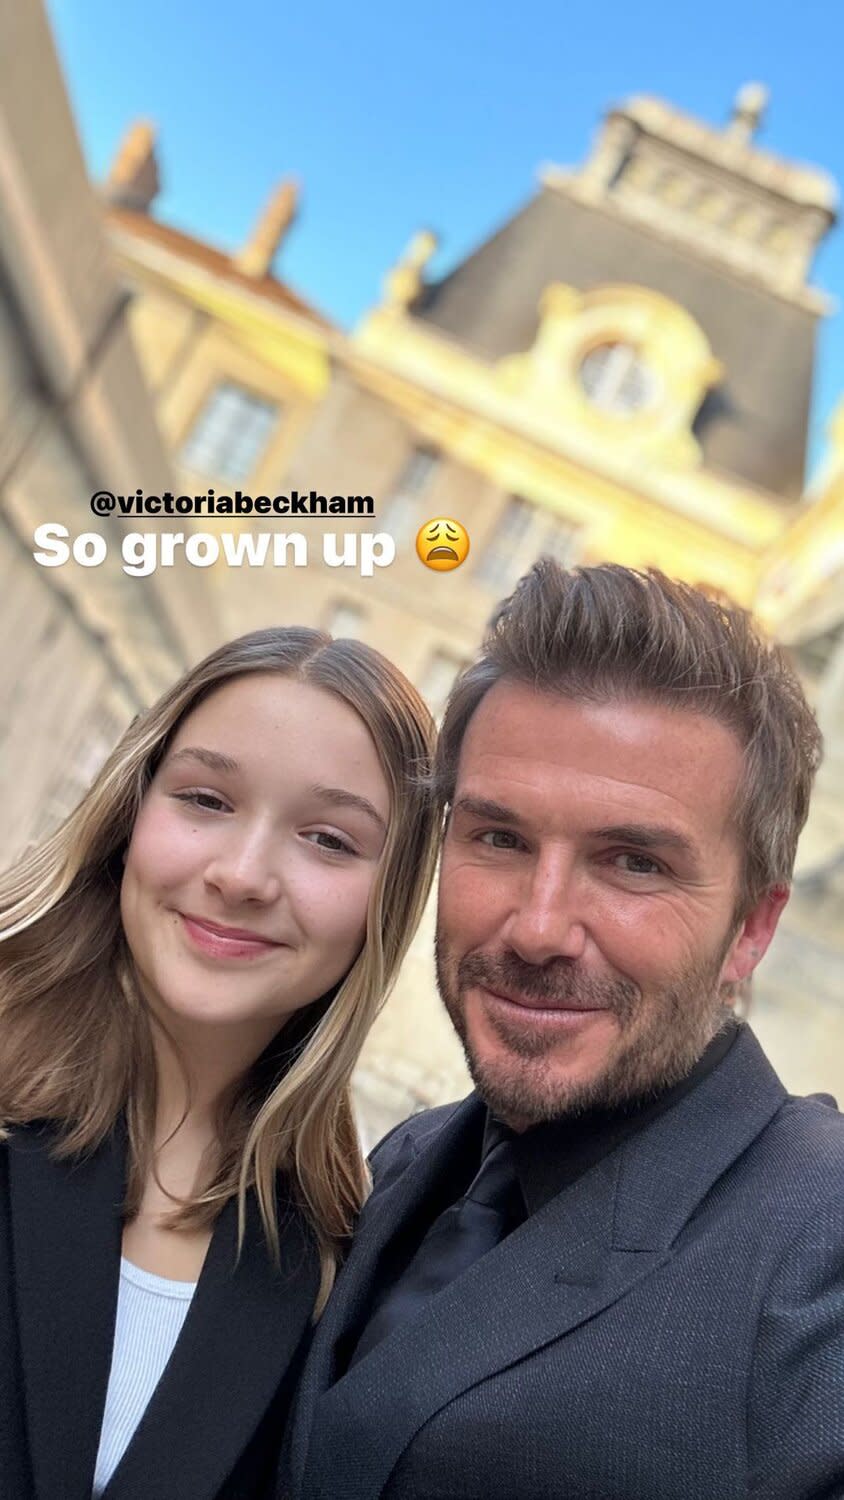 David Beckham's insta stories with the kids